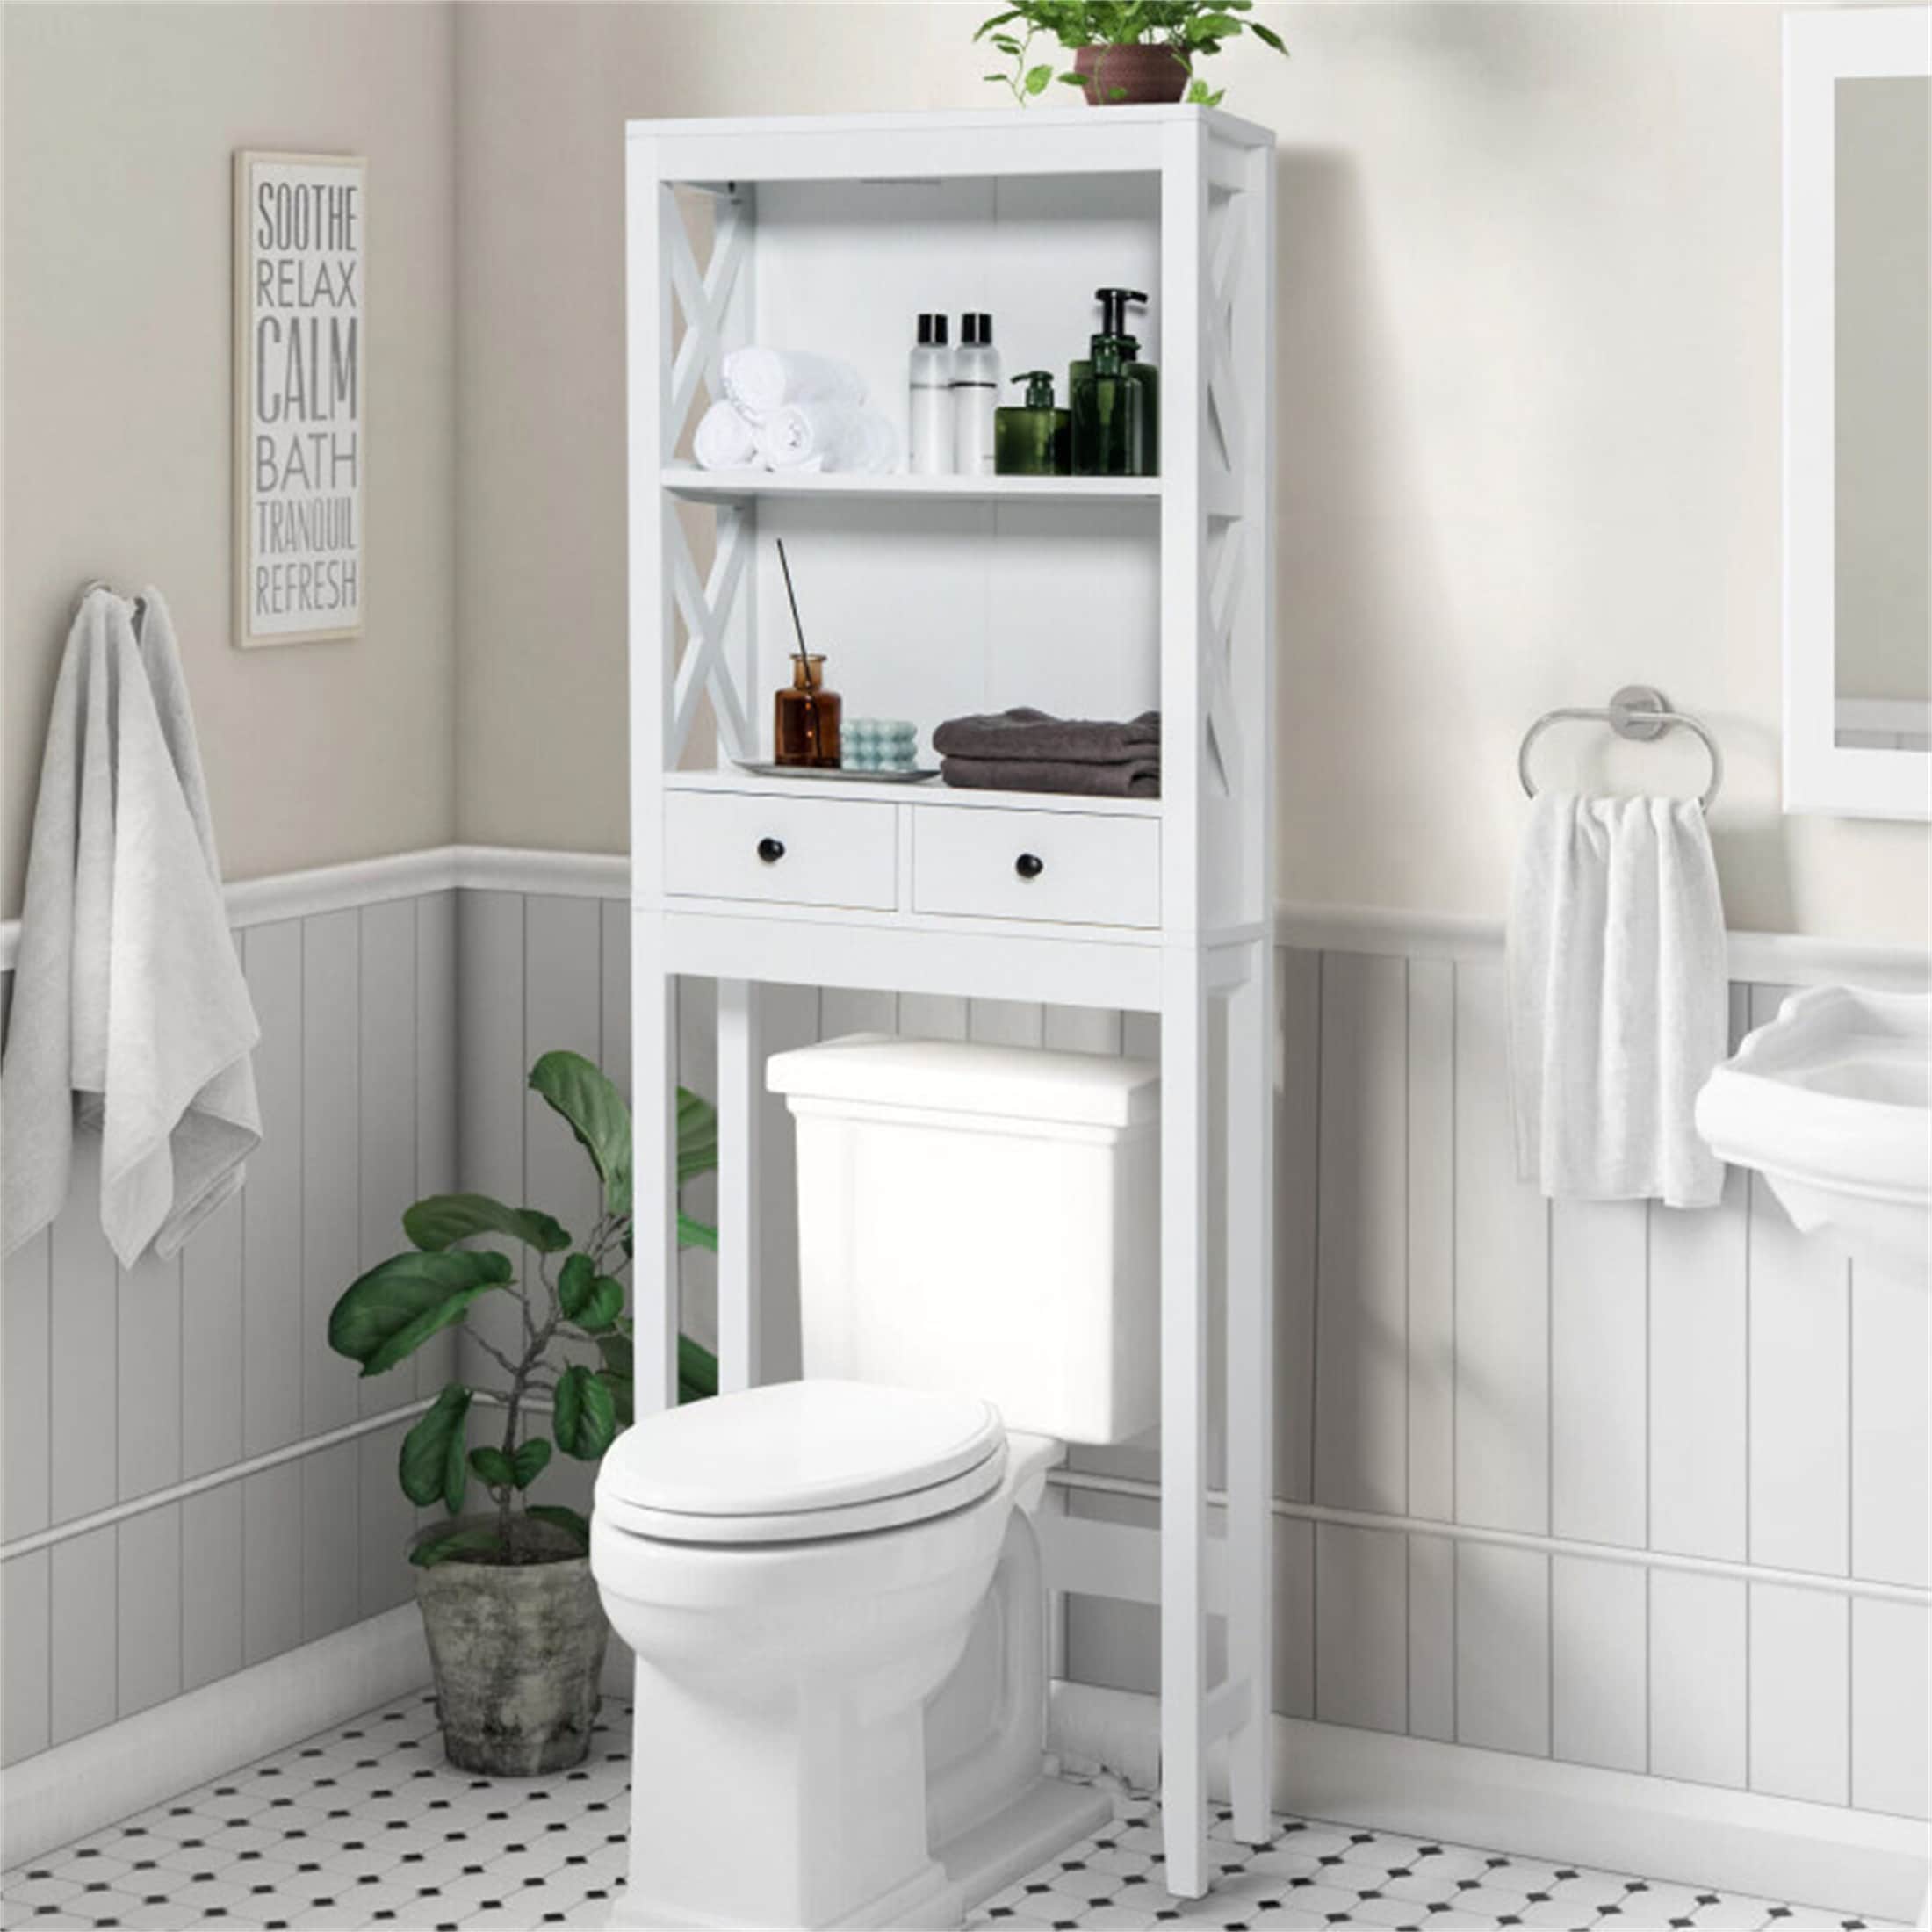 Utex Bathroom Storage Over The Toilet, Bathroom Cabinet Organizer with Adjustable Shelves, Bathroom Space Saver for Bathroom, White, Size: 8